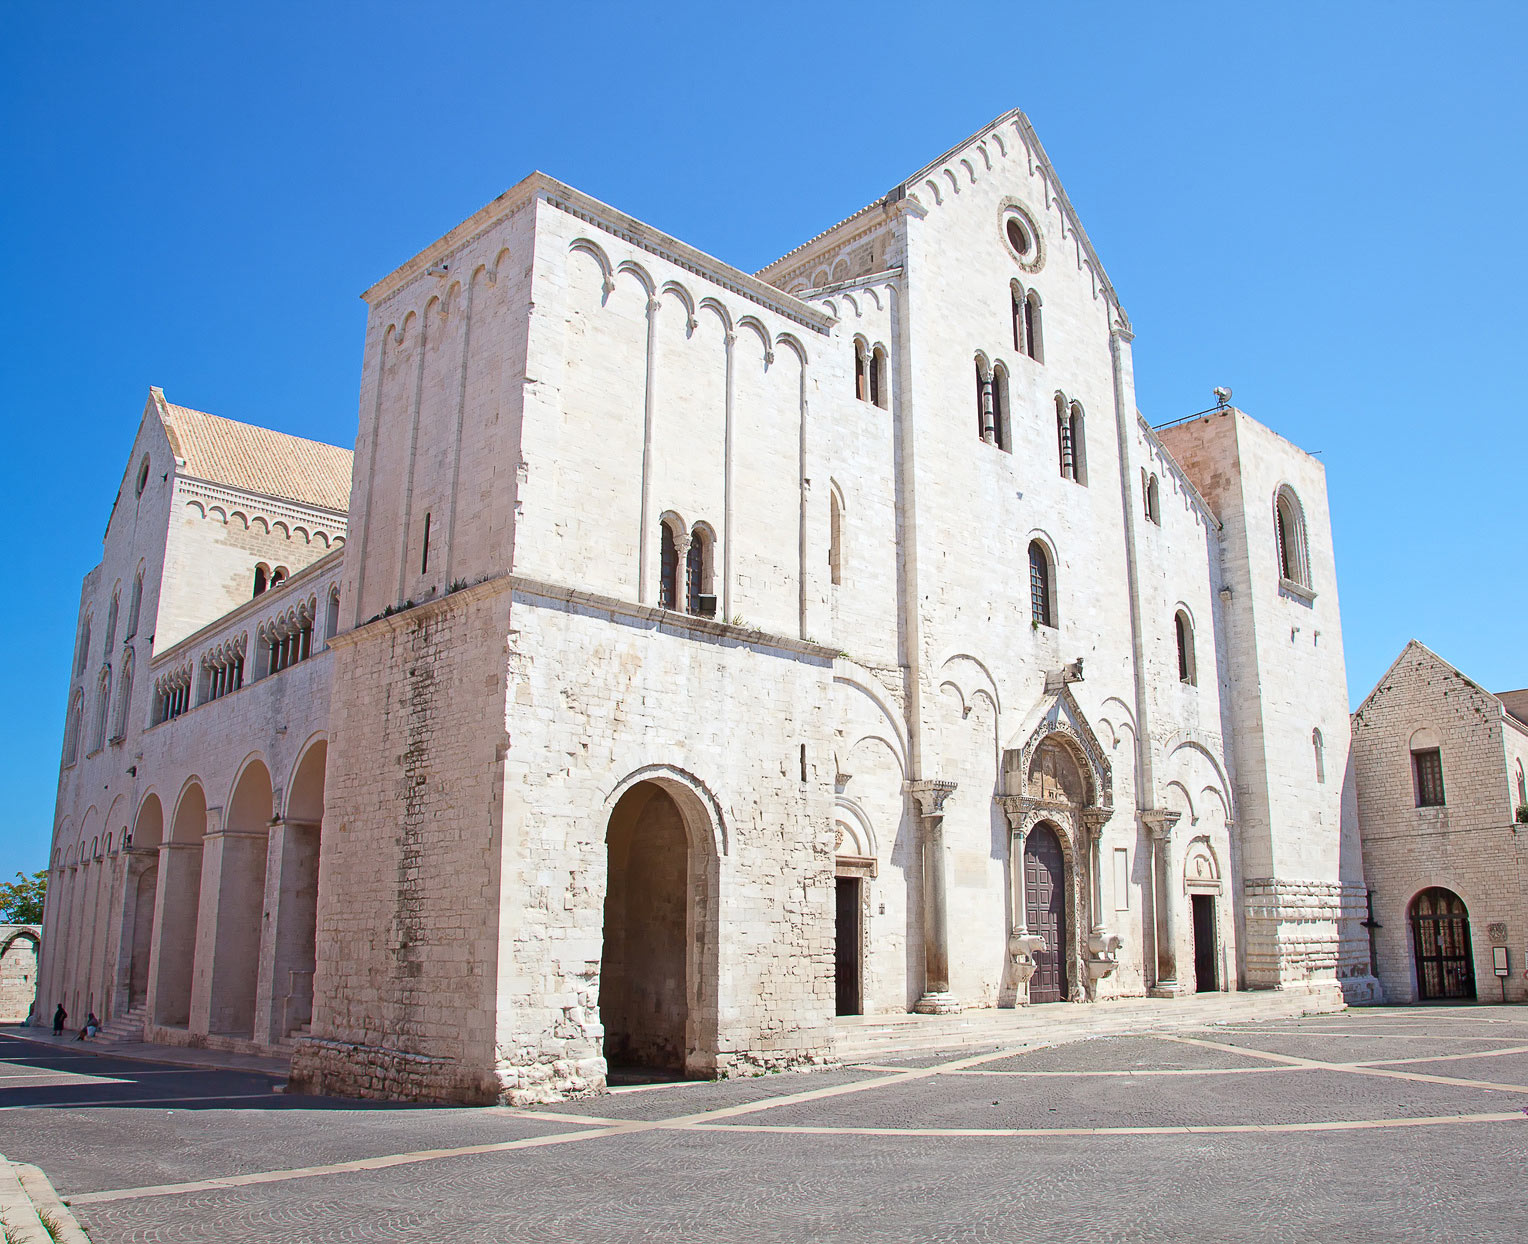 St. Nicholas Basilica, Bari, Puglia - Bari itinerary 1 day